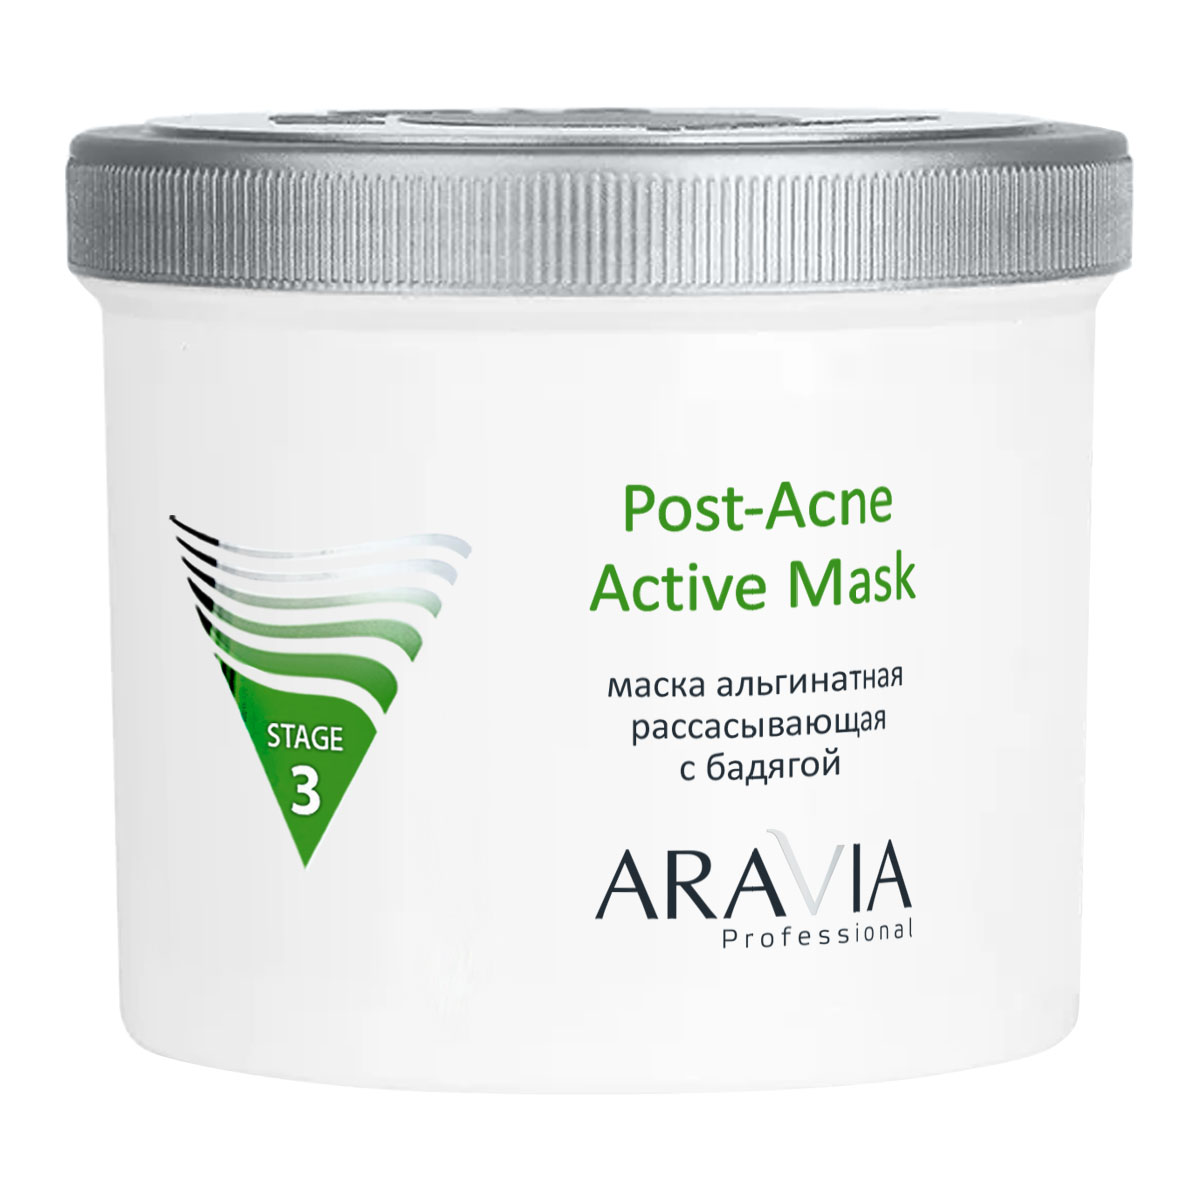 Aravia Professional Альгинатная рассасывающая маска с бадягой Post-Acne Active Mask, 550 мл (Aravia Professional, Уход за лицом) цена и фото